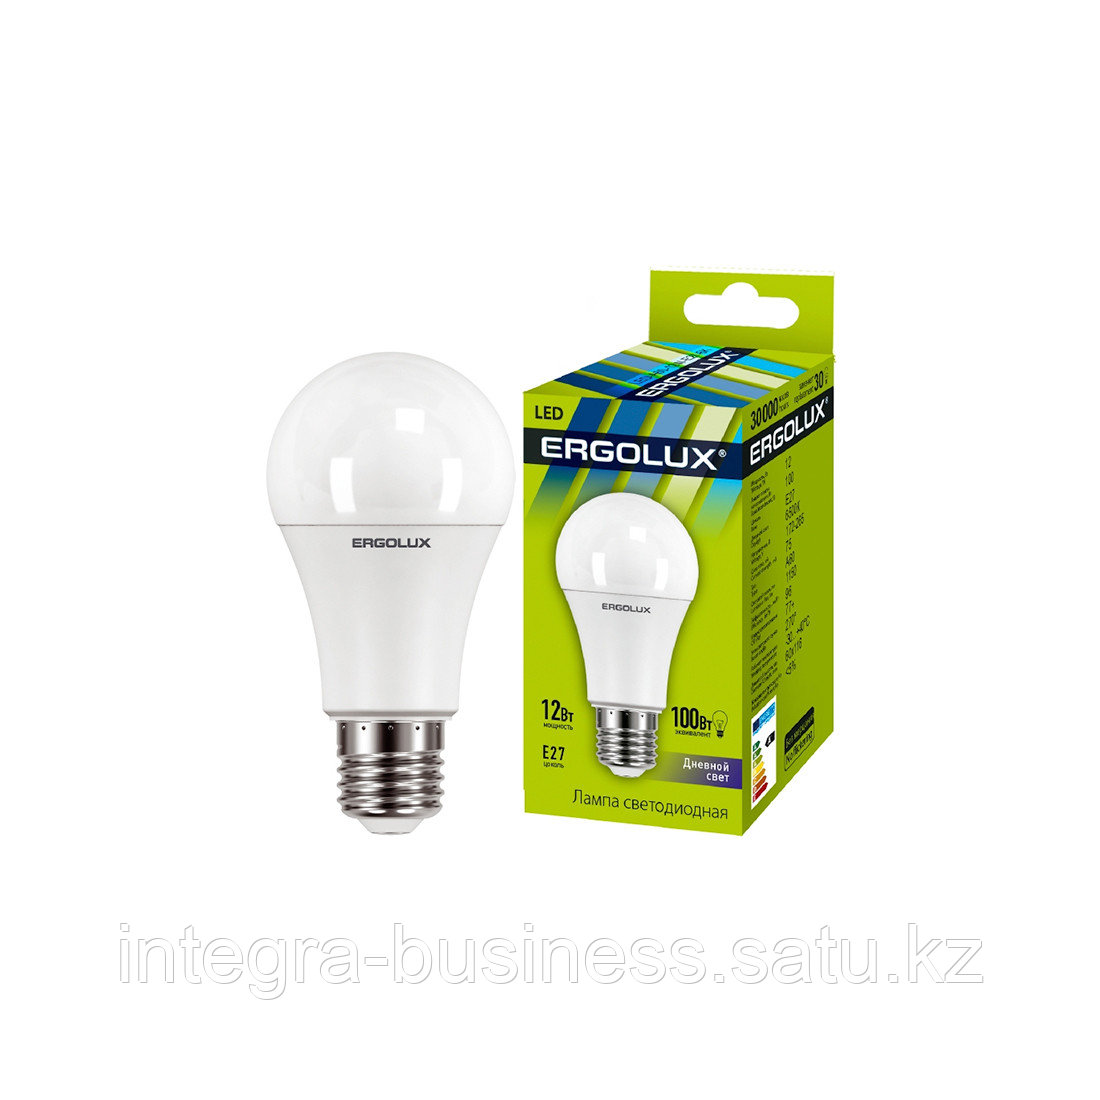 Эл. лампа светодиодная Ergolux LED-A60-12W-E27-6K, Дневной